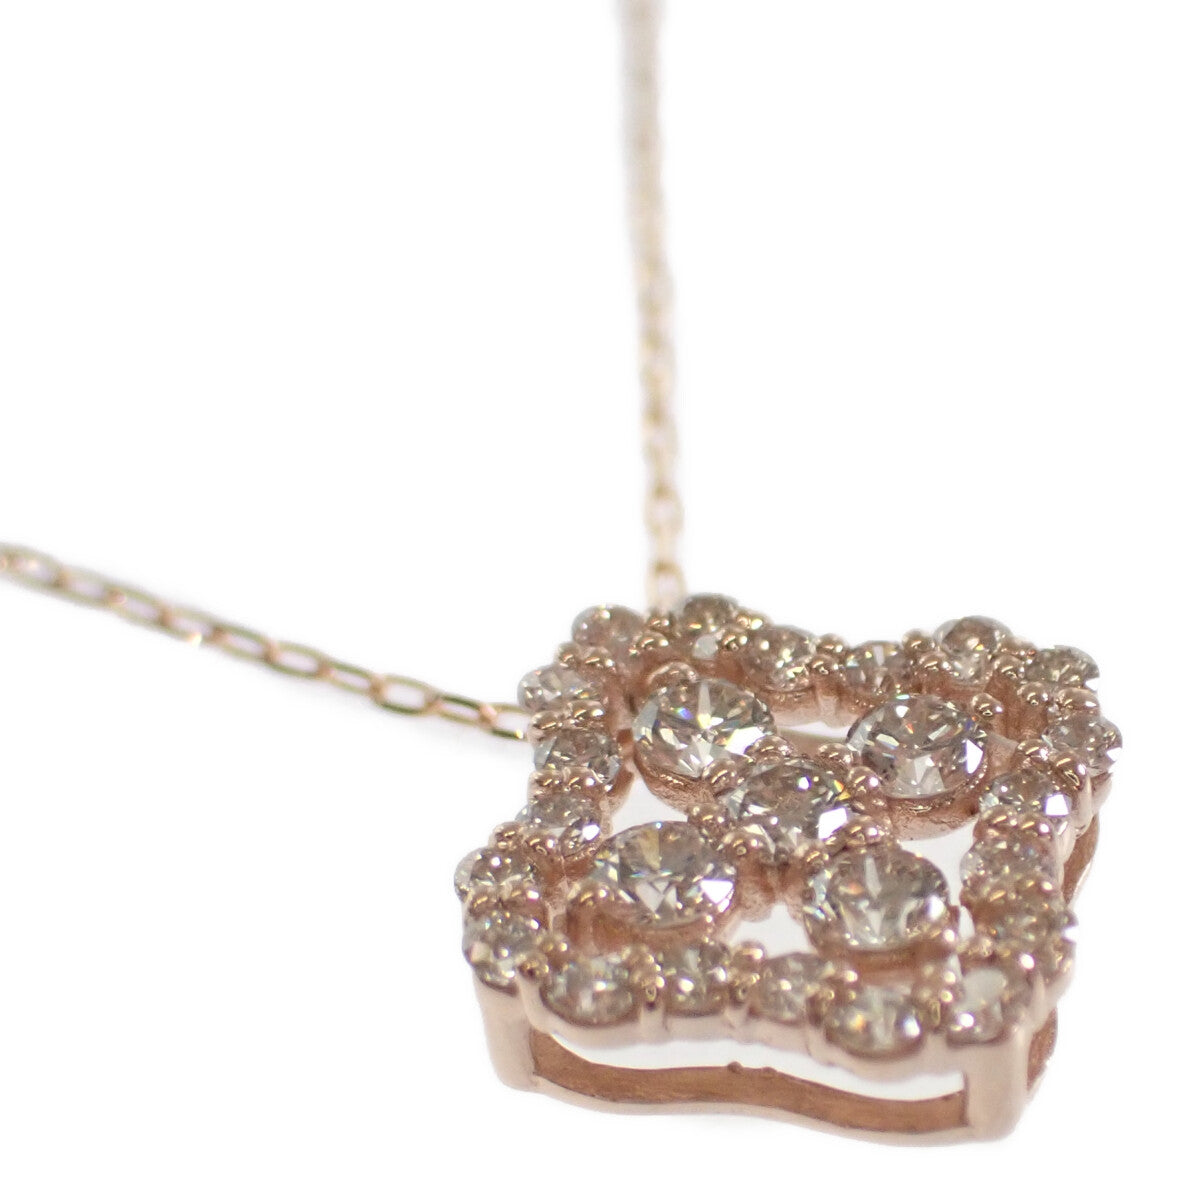 18K Diamond Necklace